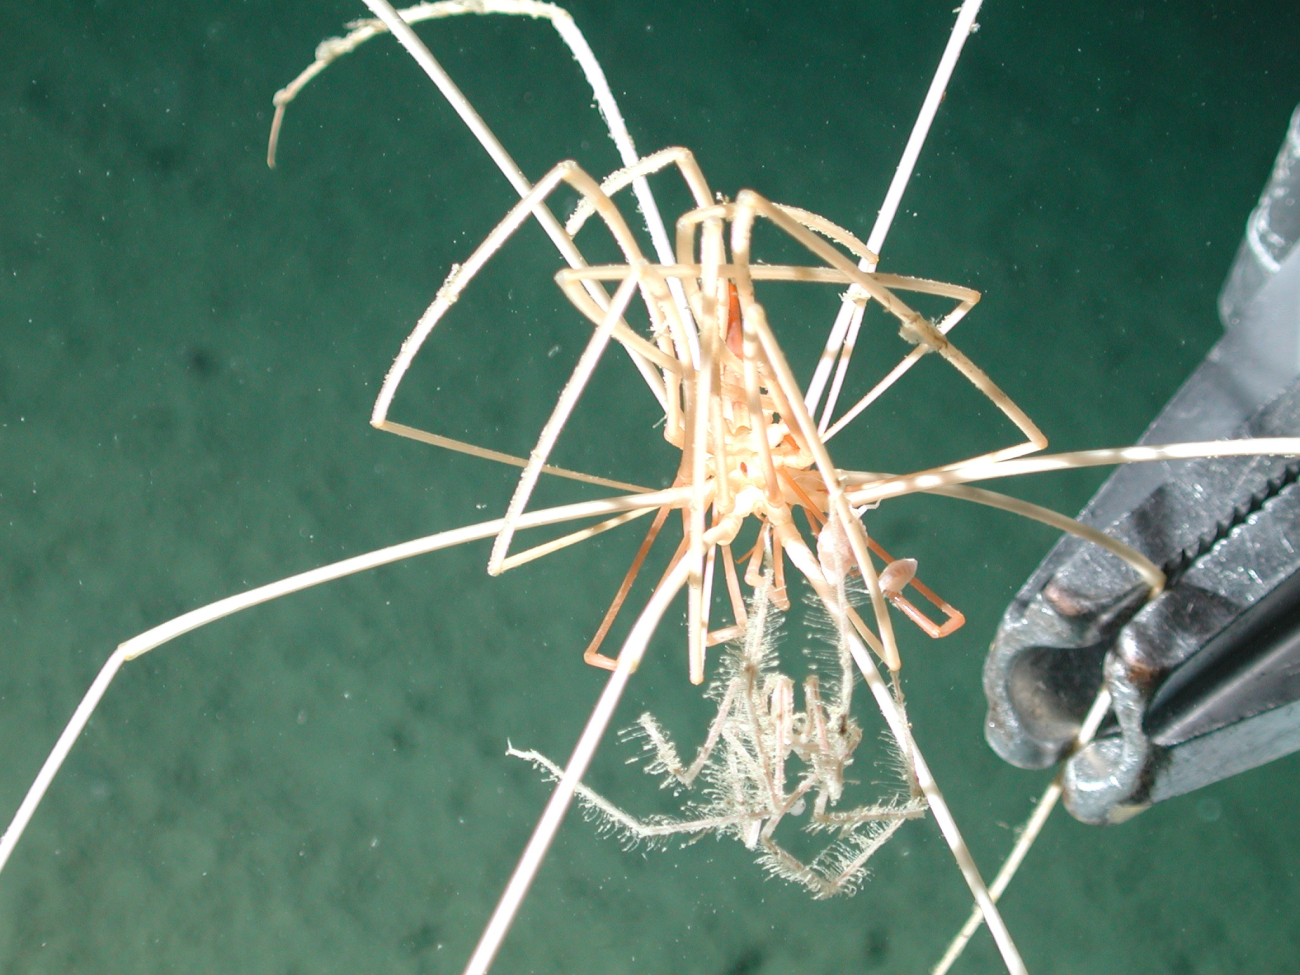 Sea spider grabbed by sampler arm of ROV